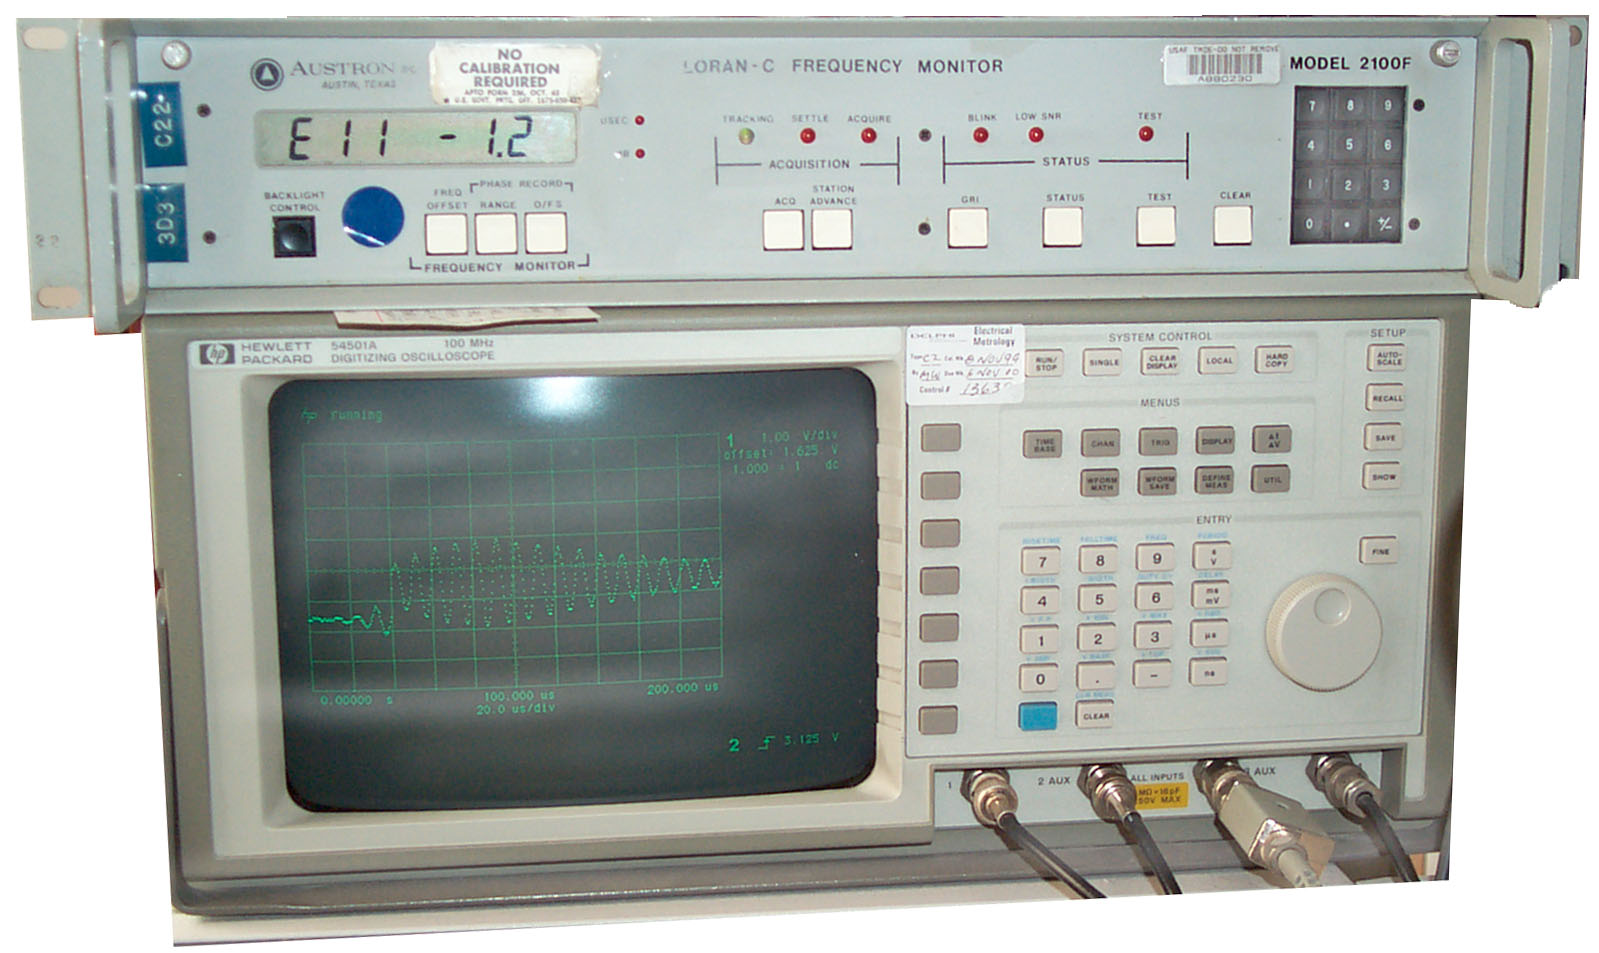 Loran c навигационная система. Austron. C frequency